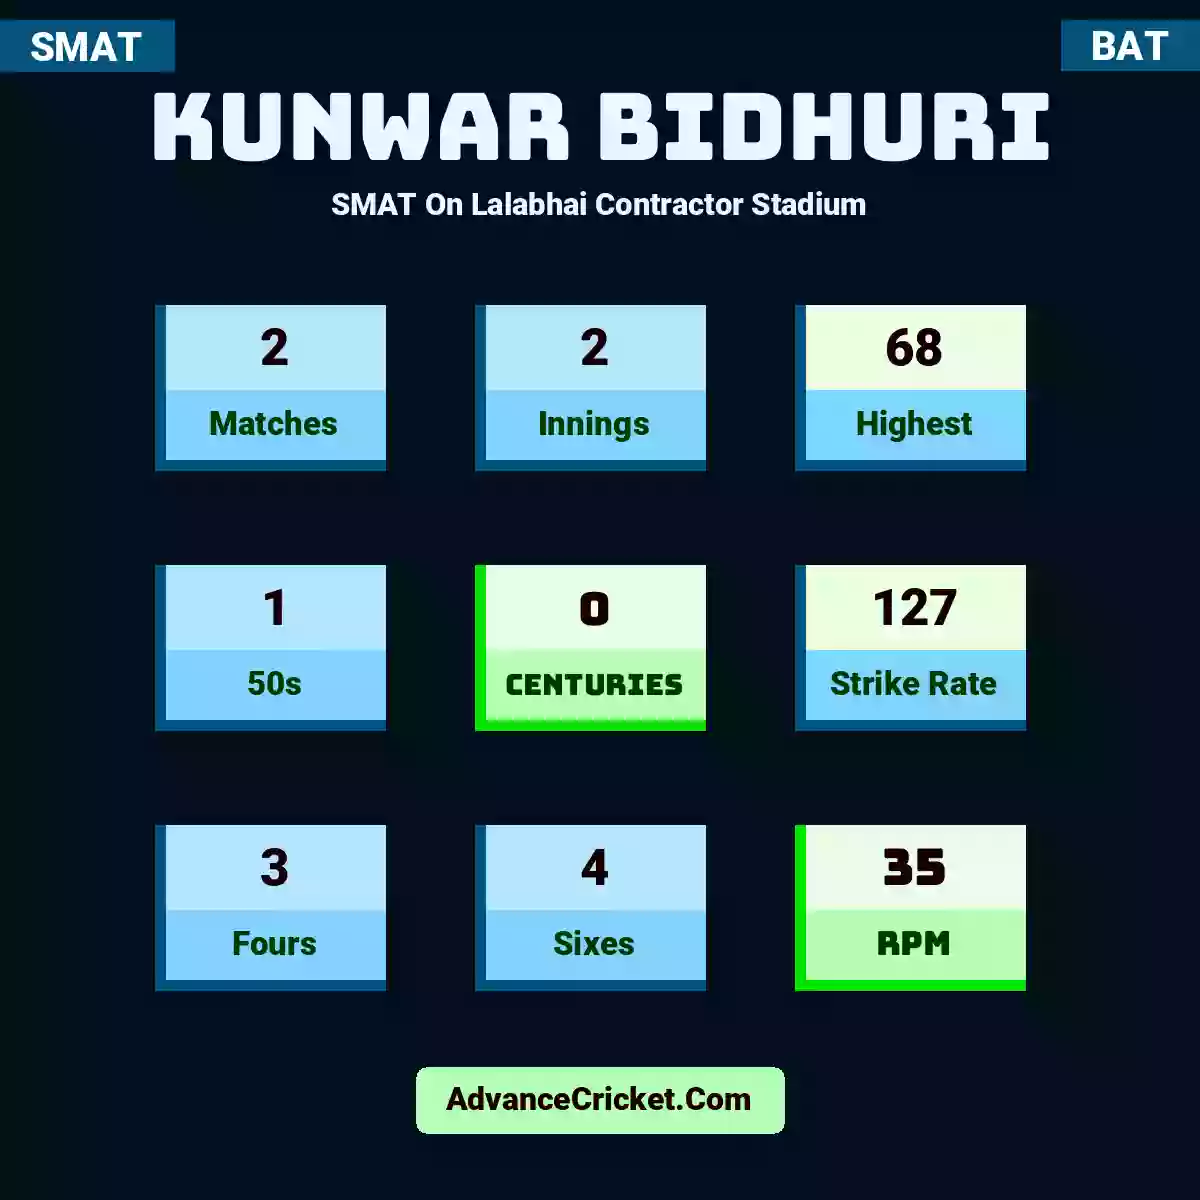 Kunwar Bidhuri SMAT  On Lalabhai Contractor Stadium, Kunwar Bidhuri played 2 matches, scored 68 runs as highest, 1 half-centuries, and 0 centuries, with a strike rate of 127. K.Bidhuri hit 3 fours and 4 sixes, with an RPM of 35.